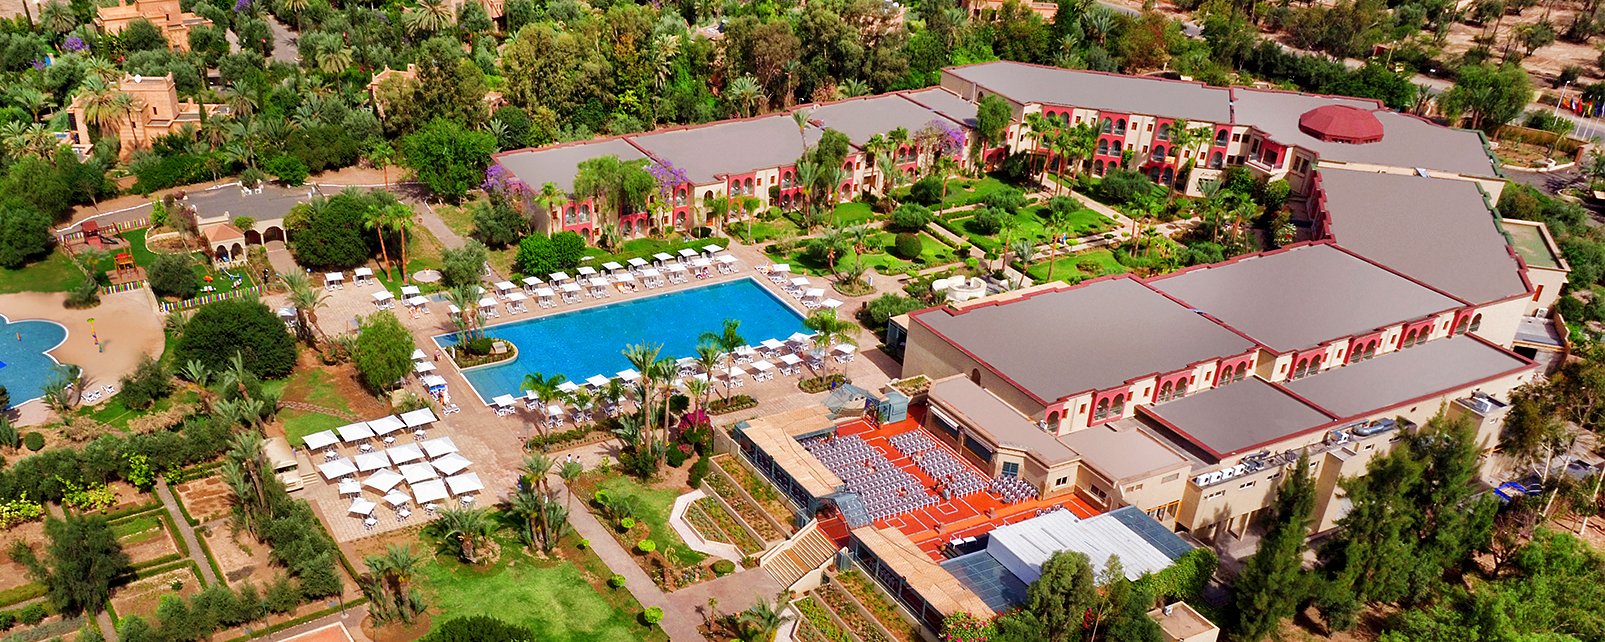 Hotel Kappa Club Iberostar Palmeraie Marrakech 4*